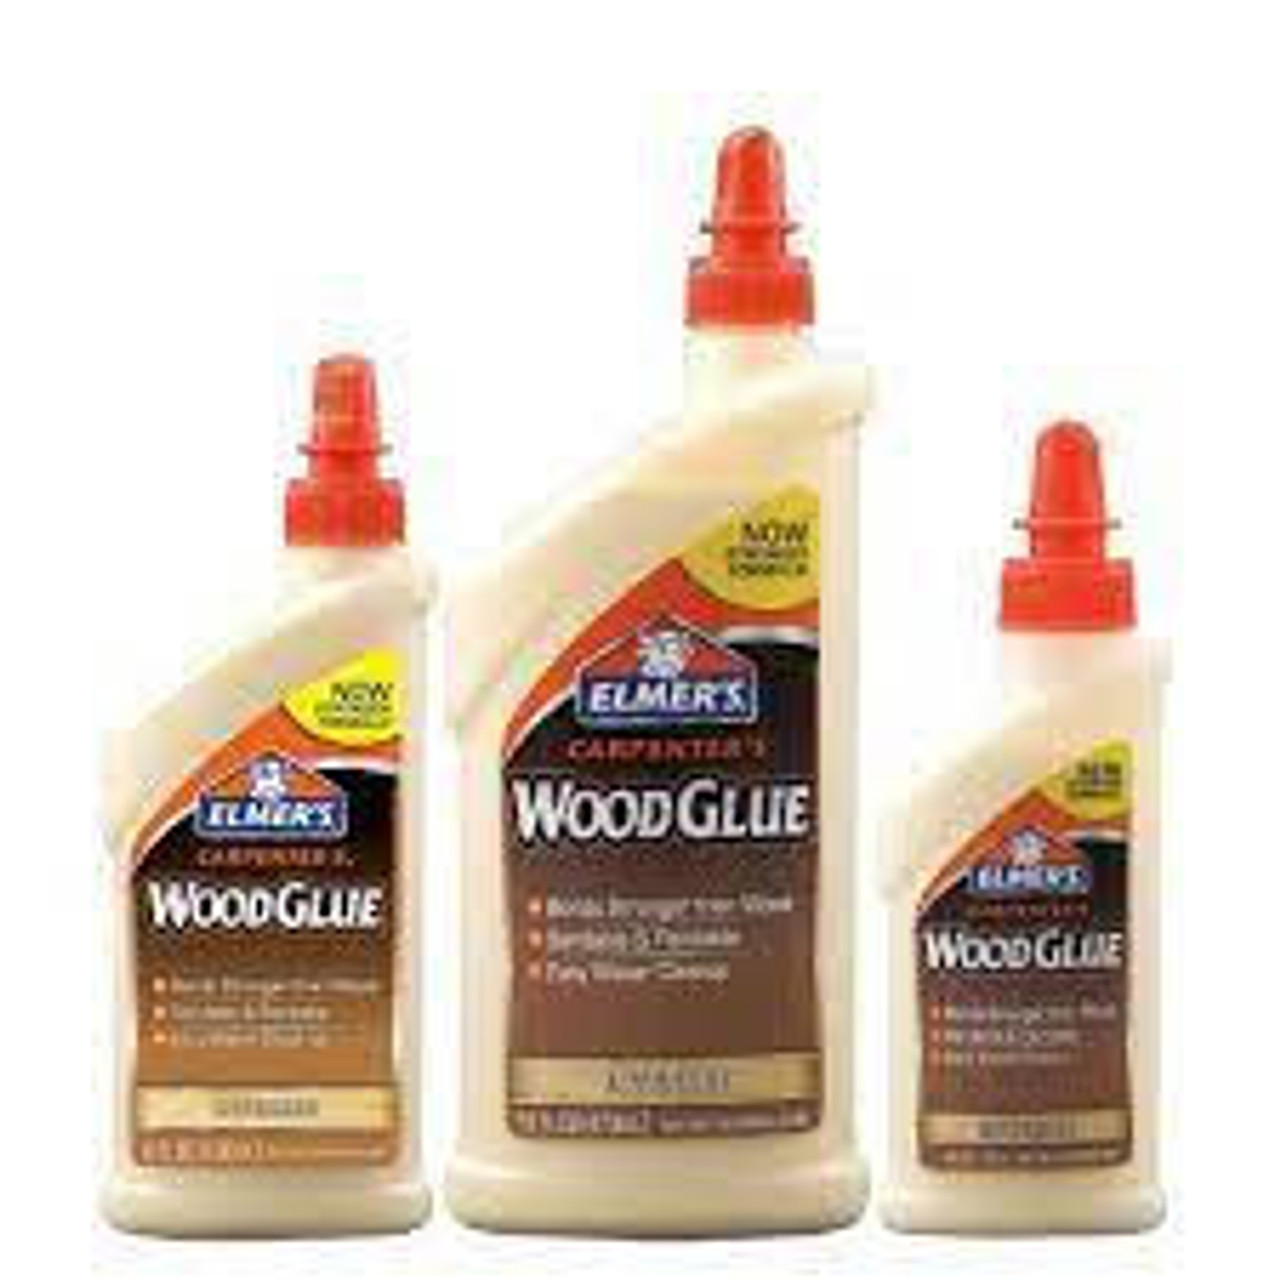 Elmer's Glue-All, Multi-Purpose Glue, Safe & Non-Toxic, Dries Fast, 4oz  Bottle - Sam Flax Atlanta